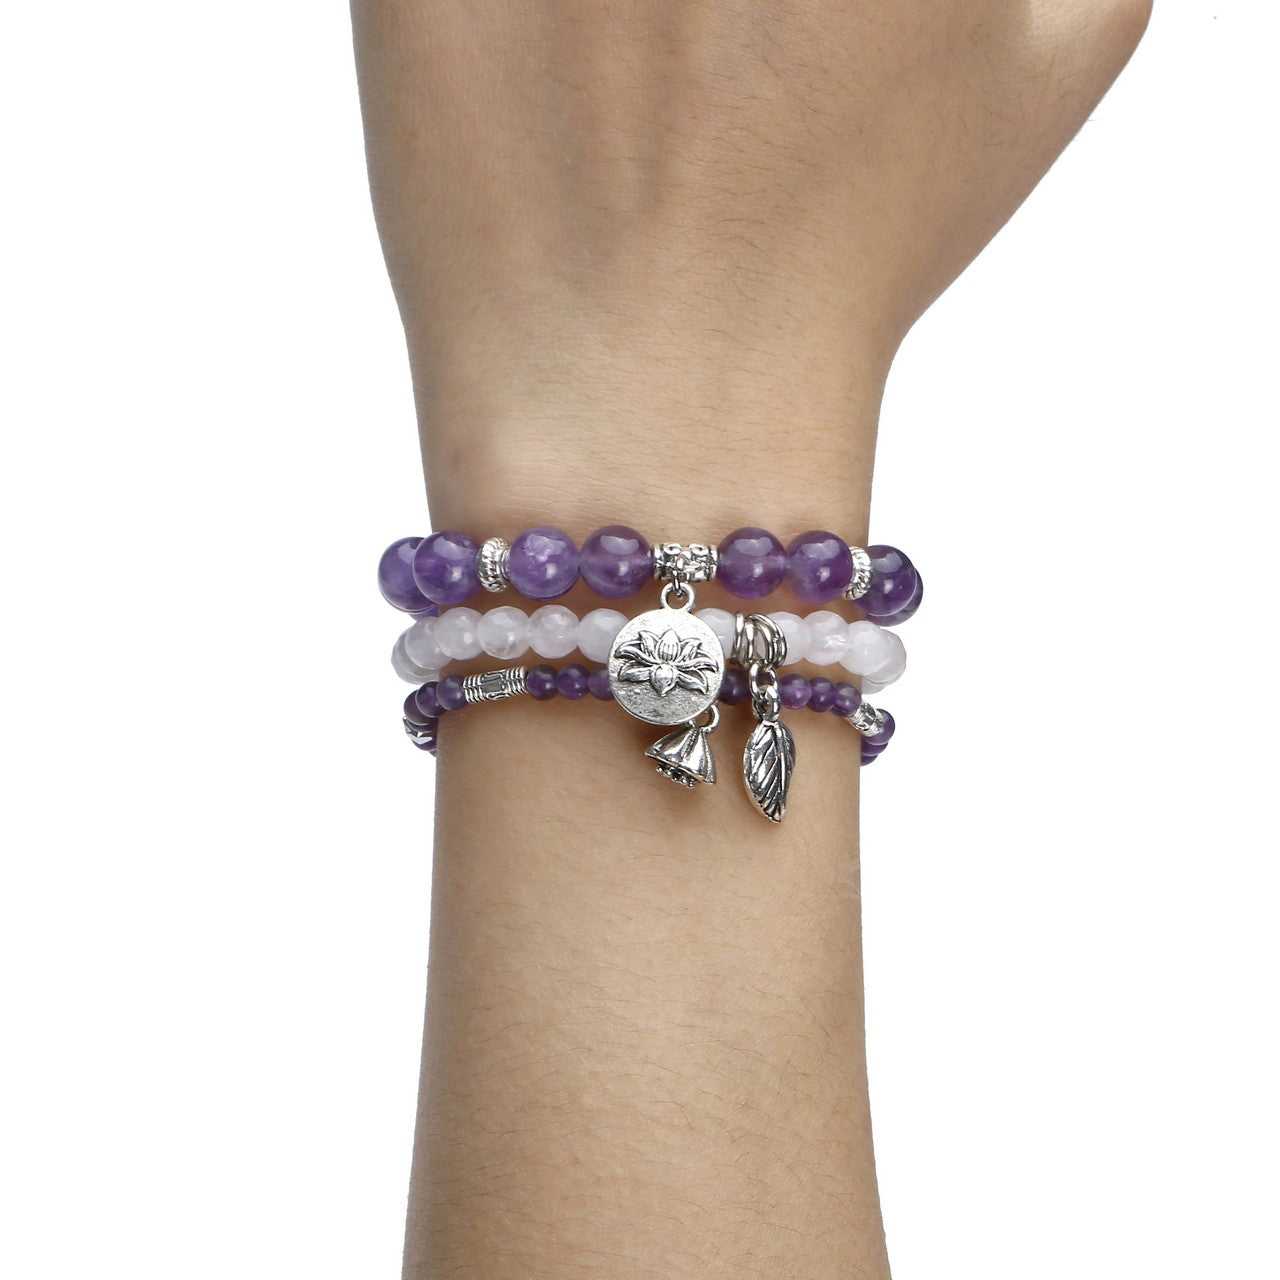 jovivi healing balancing crystal bracelets for women, jjb086501